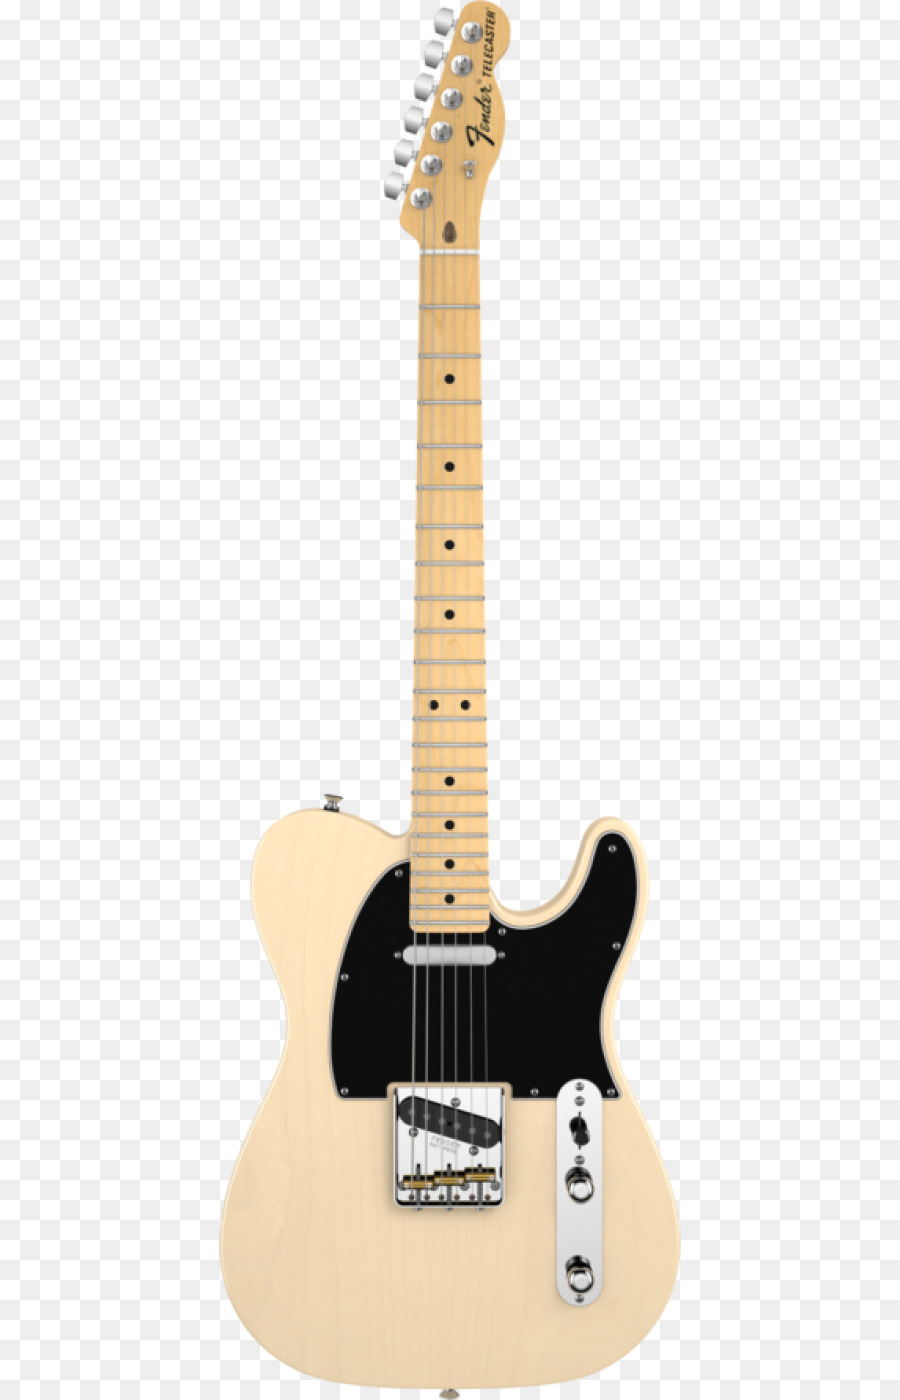 Fender Telecaster Fender Musical Instruments Corporation Fender American Special Telecaster Chitarra Elettrica - chitarra